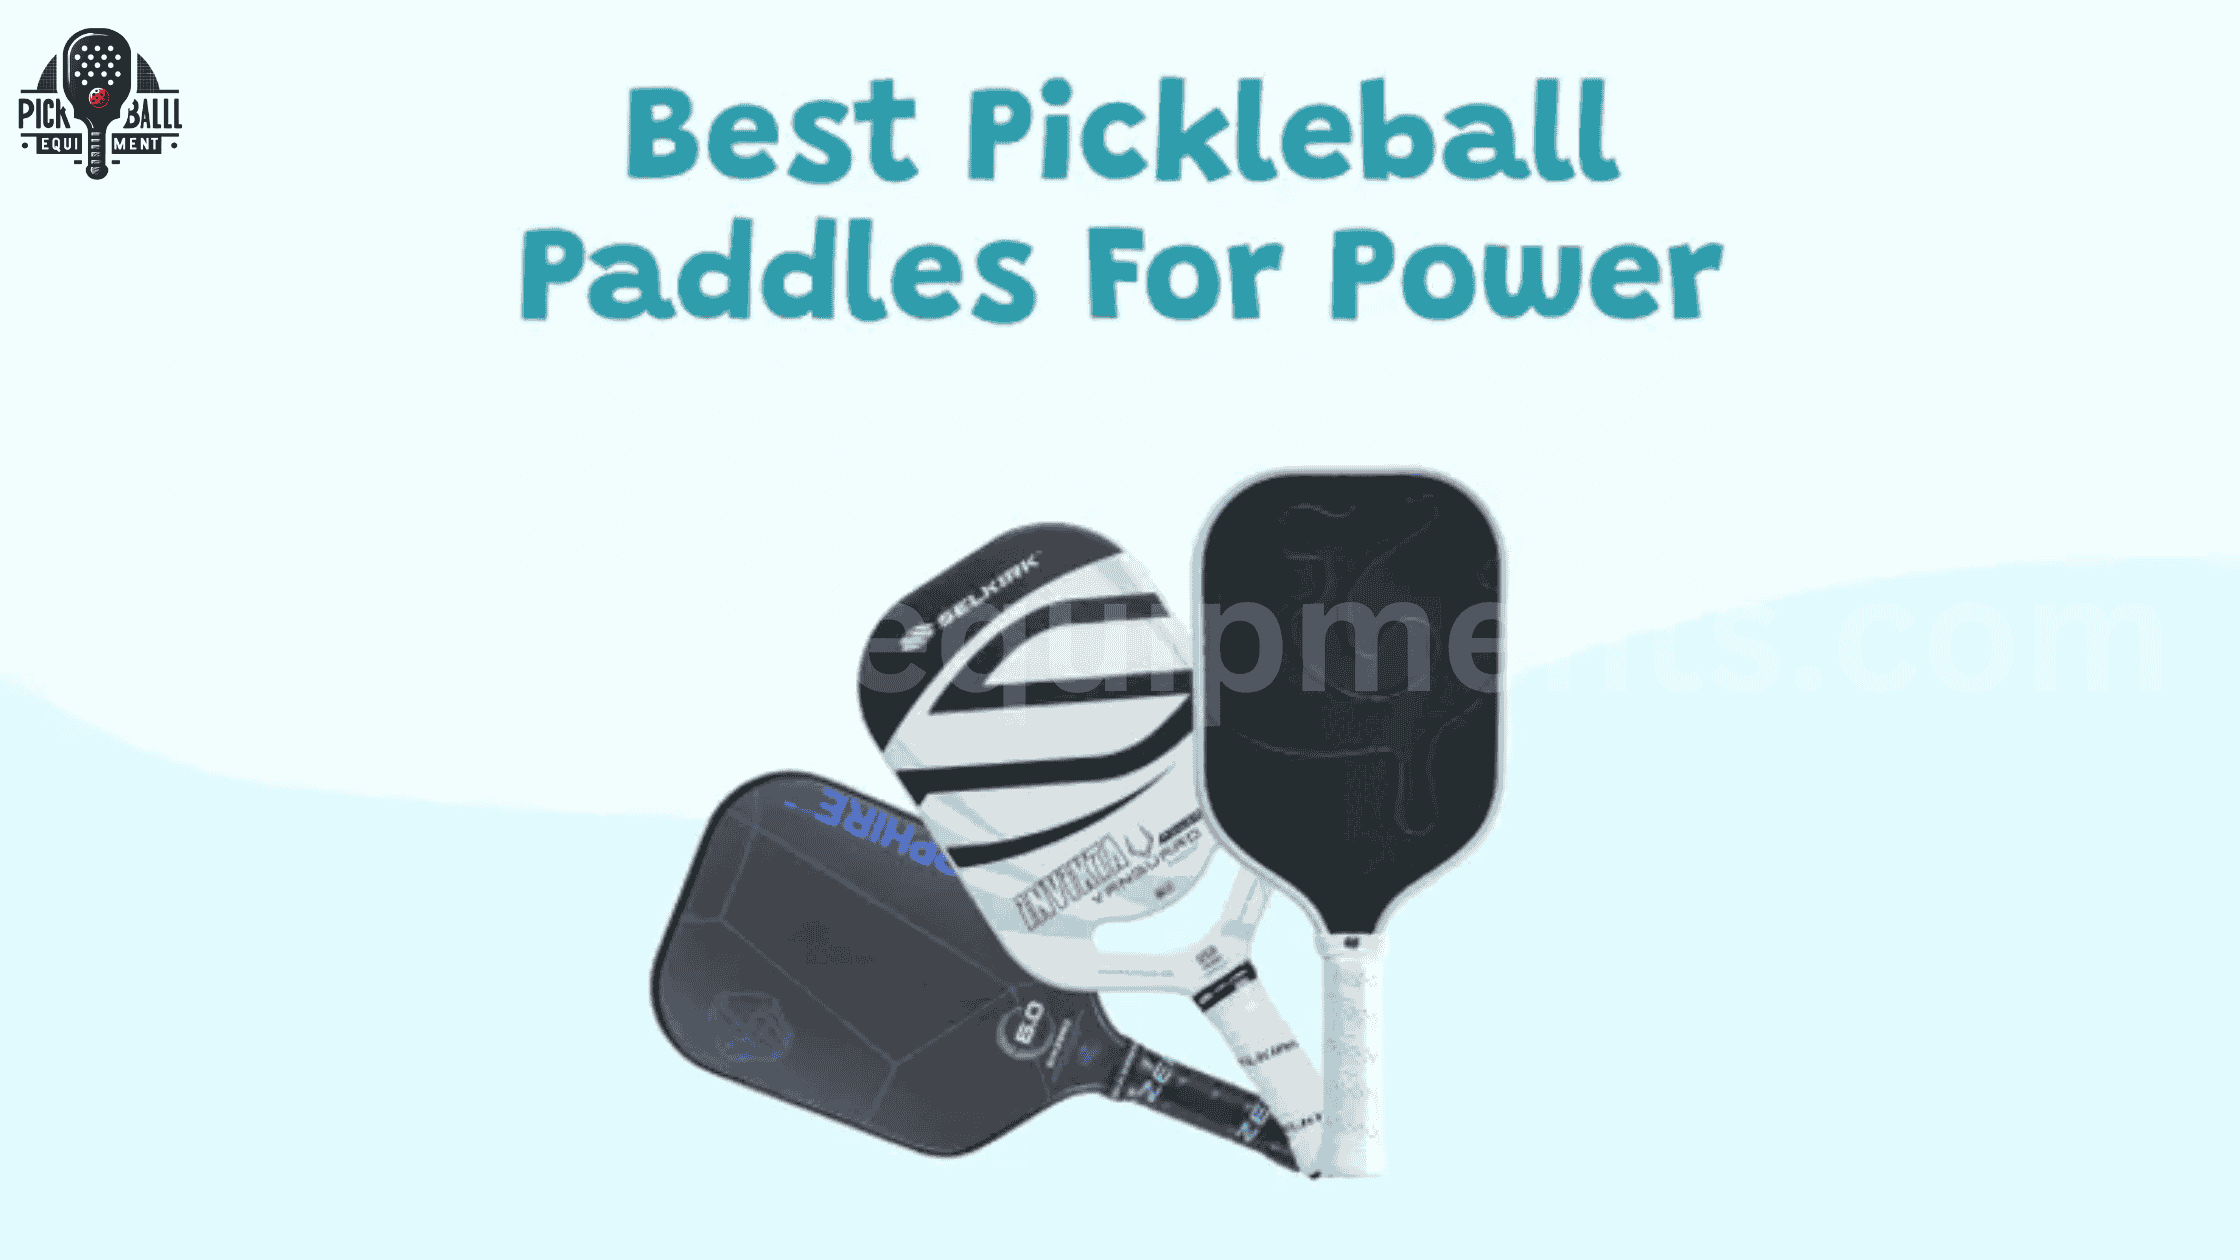 Best Pickleball Paddle for Power